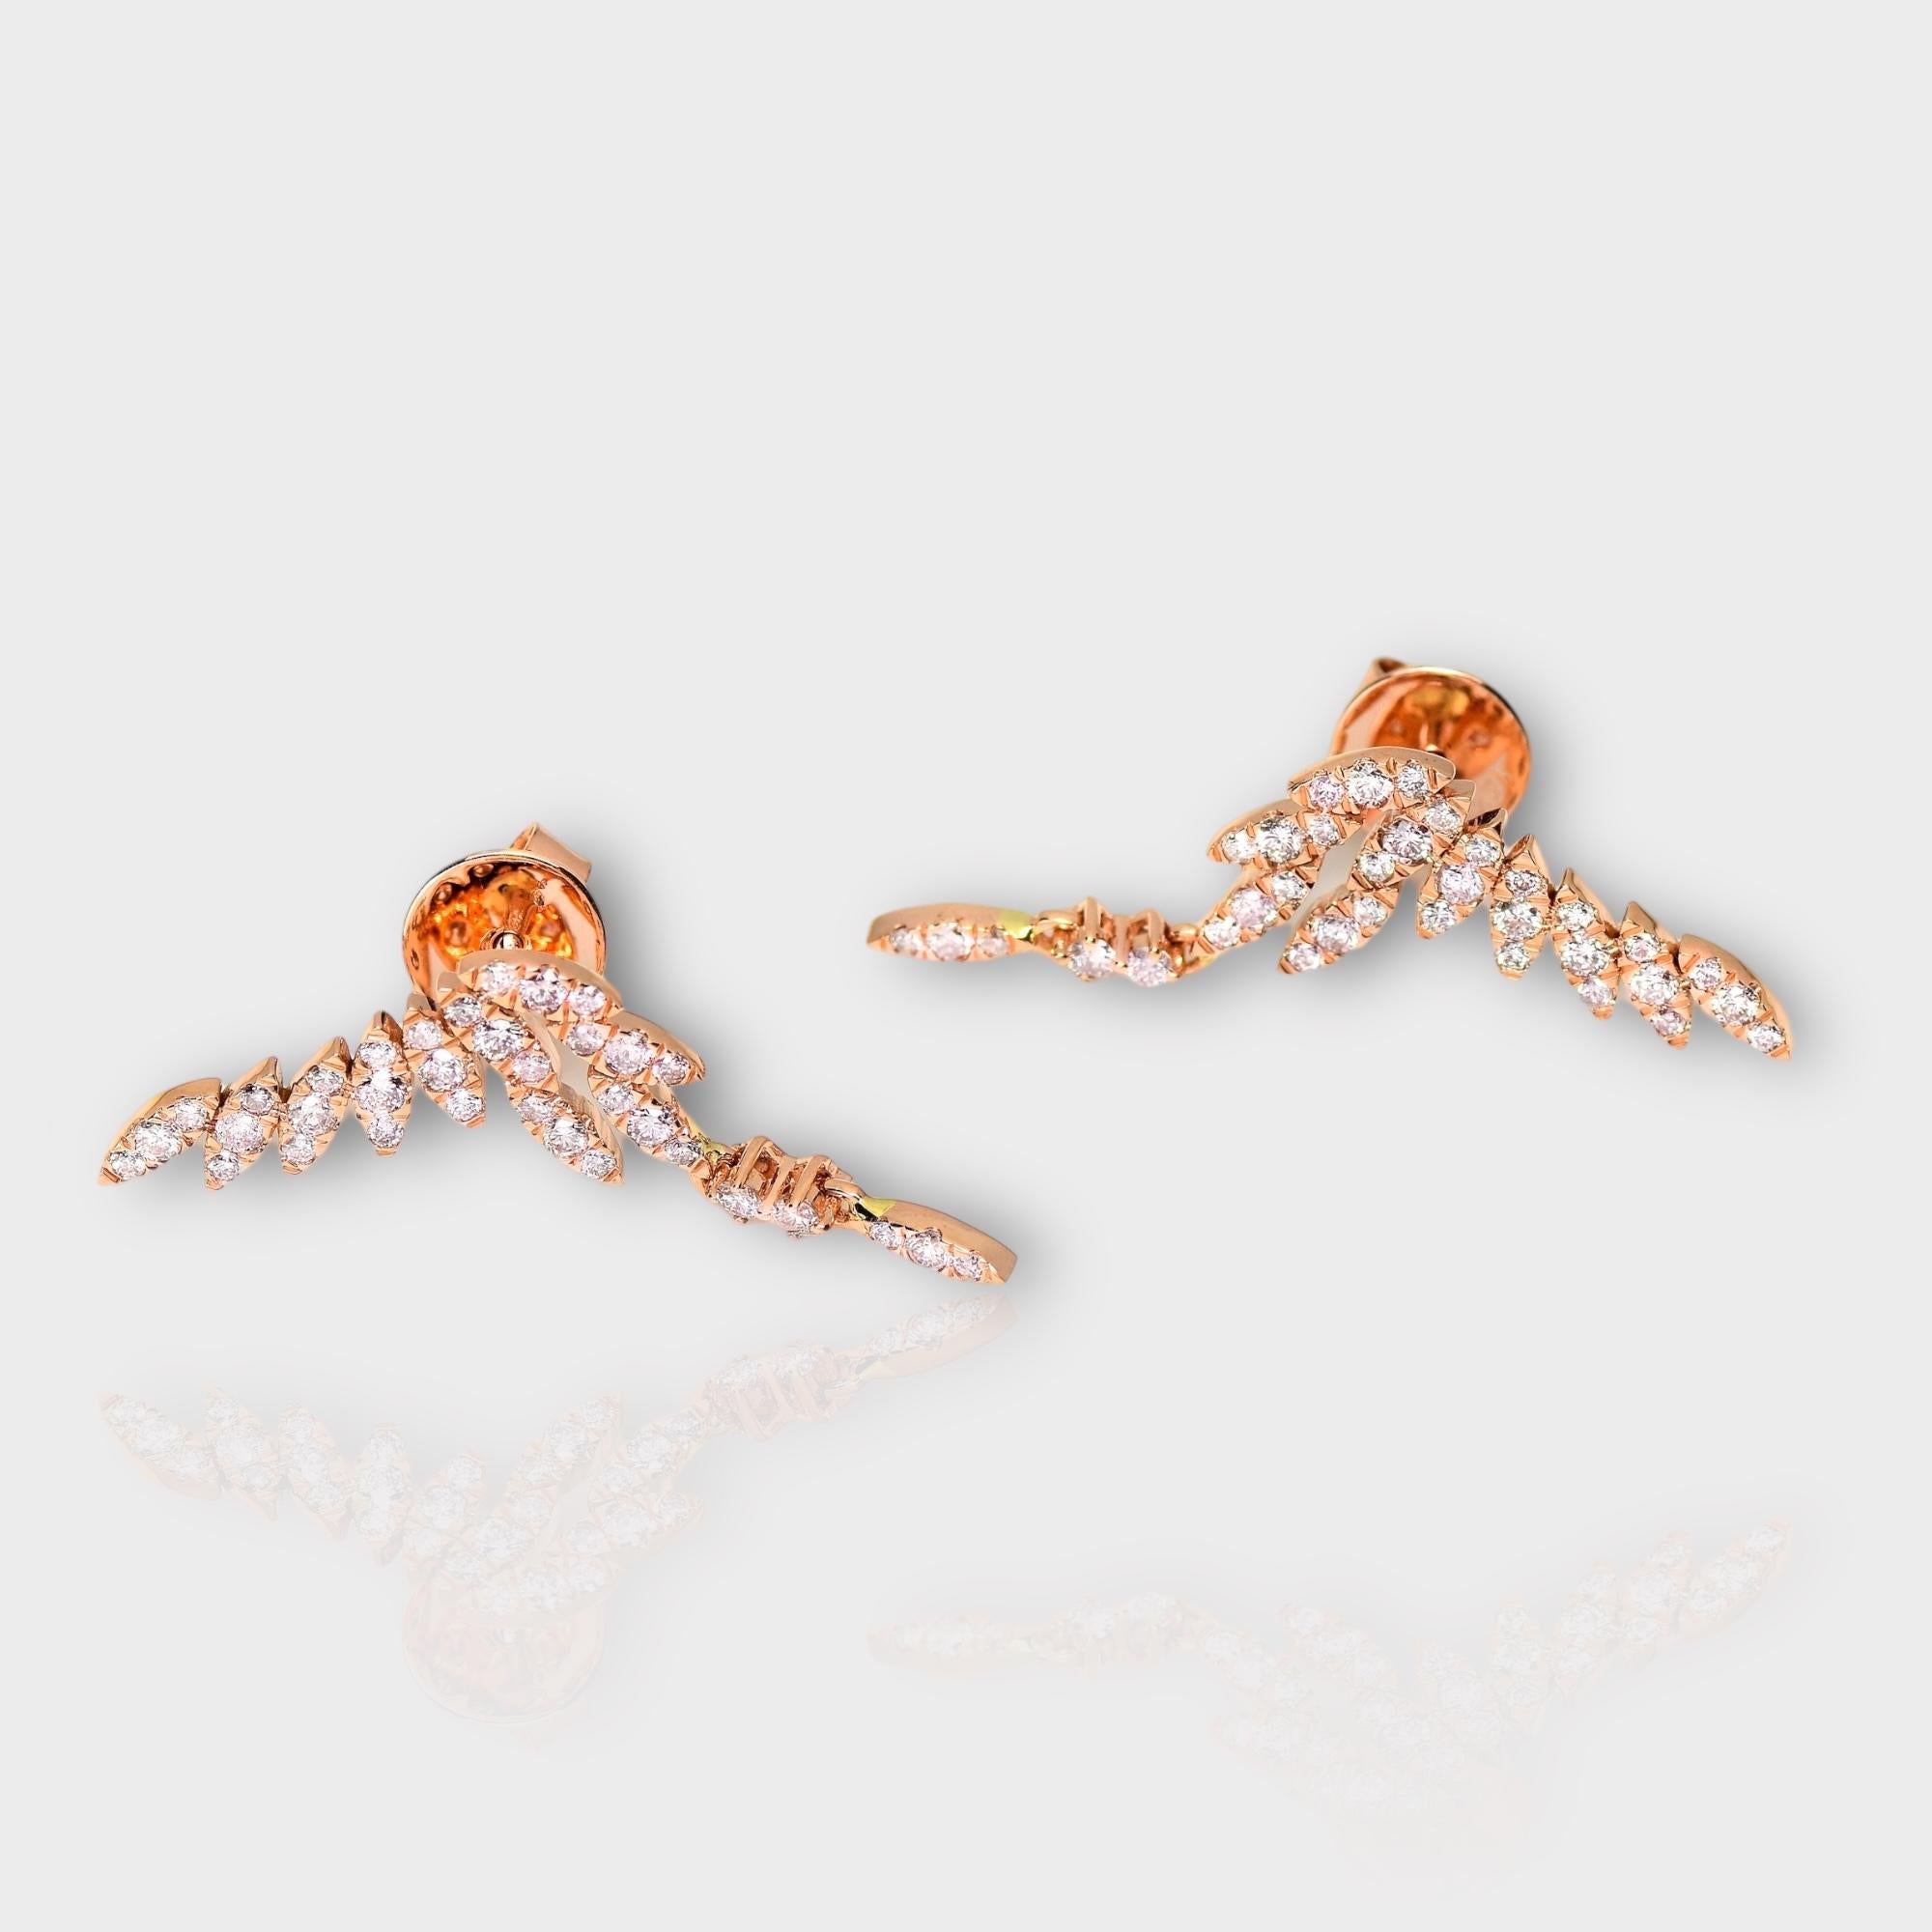 Contemporary IGI 14K 0.87 ct Natural Pink Diamonds Art Deco Design Stud Earrings For Sale